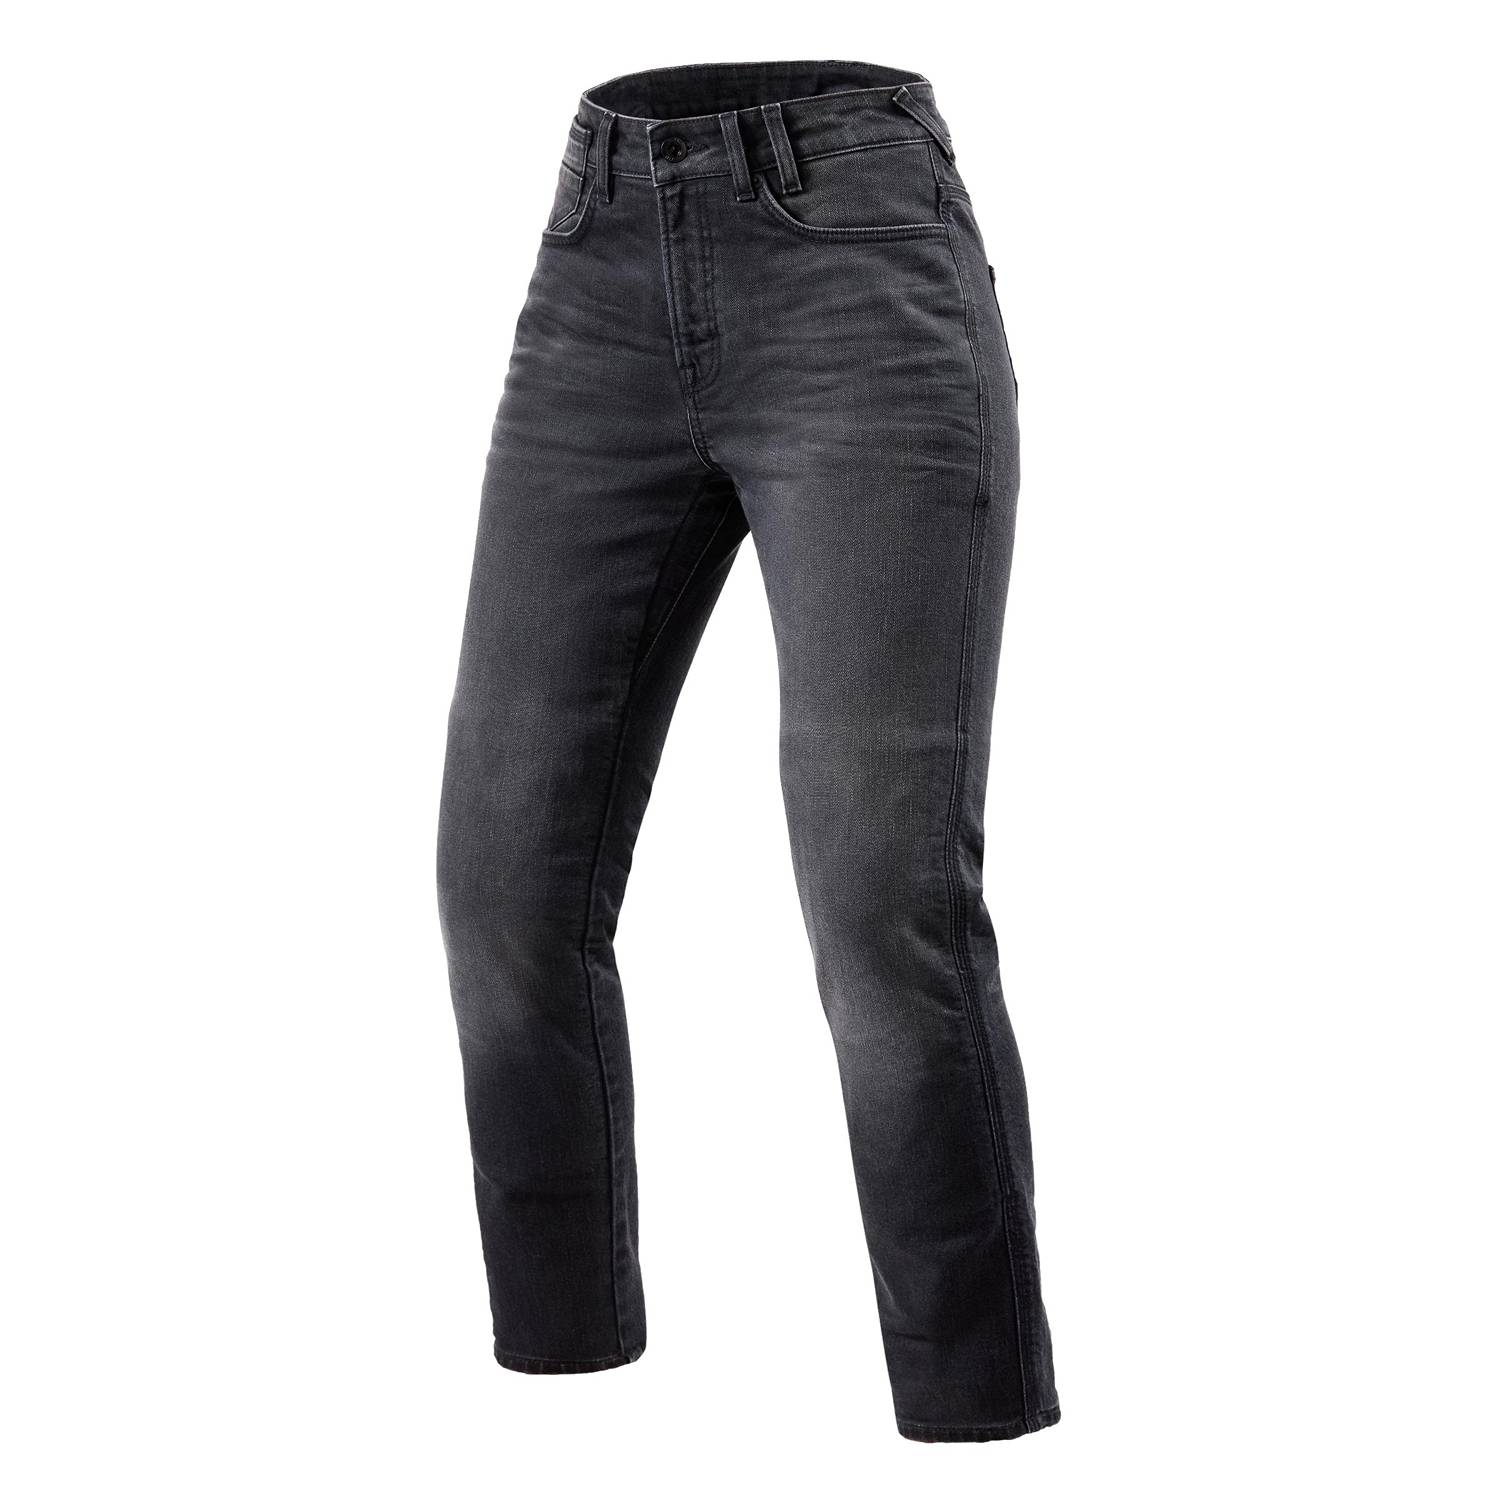 Image of REV'IT! Jeans Victoria 2 Ladies SF Mid Grey Used Motorcycle Jeans Size L32/W32 EN